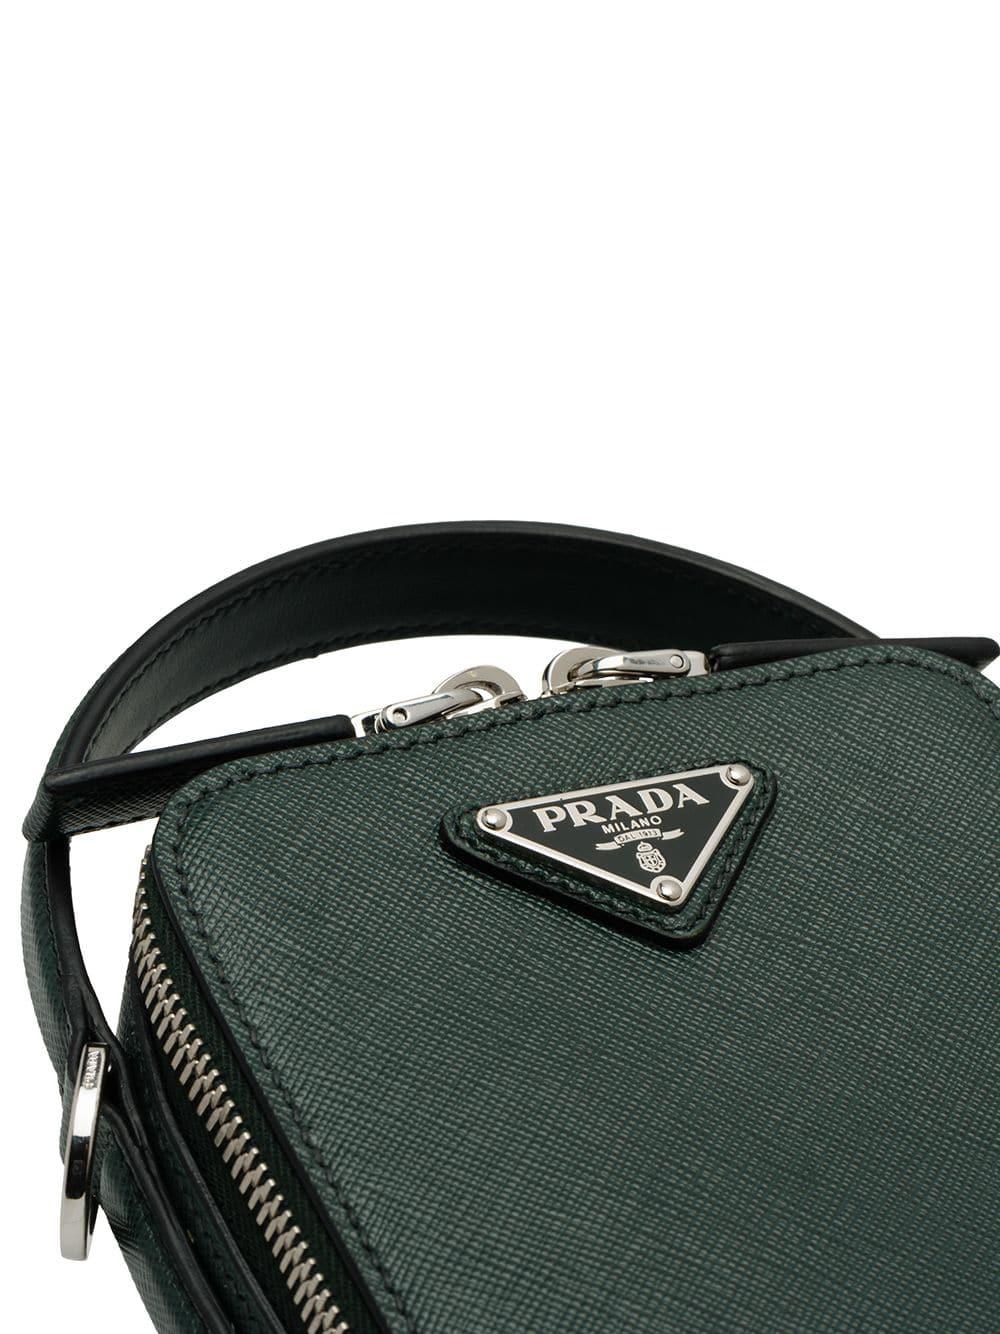 Prada Brique Saffiano Leather Bag in Green for Men | Lyst